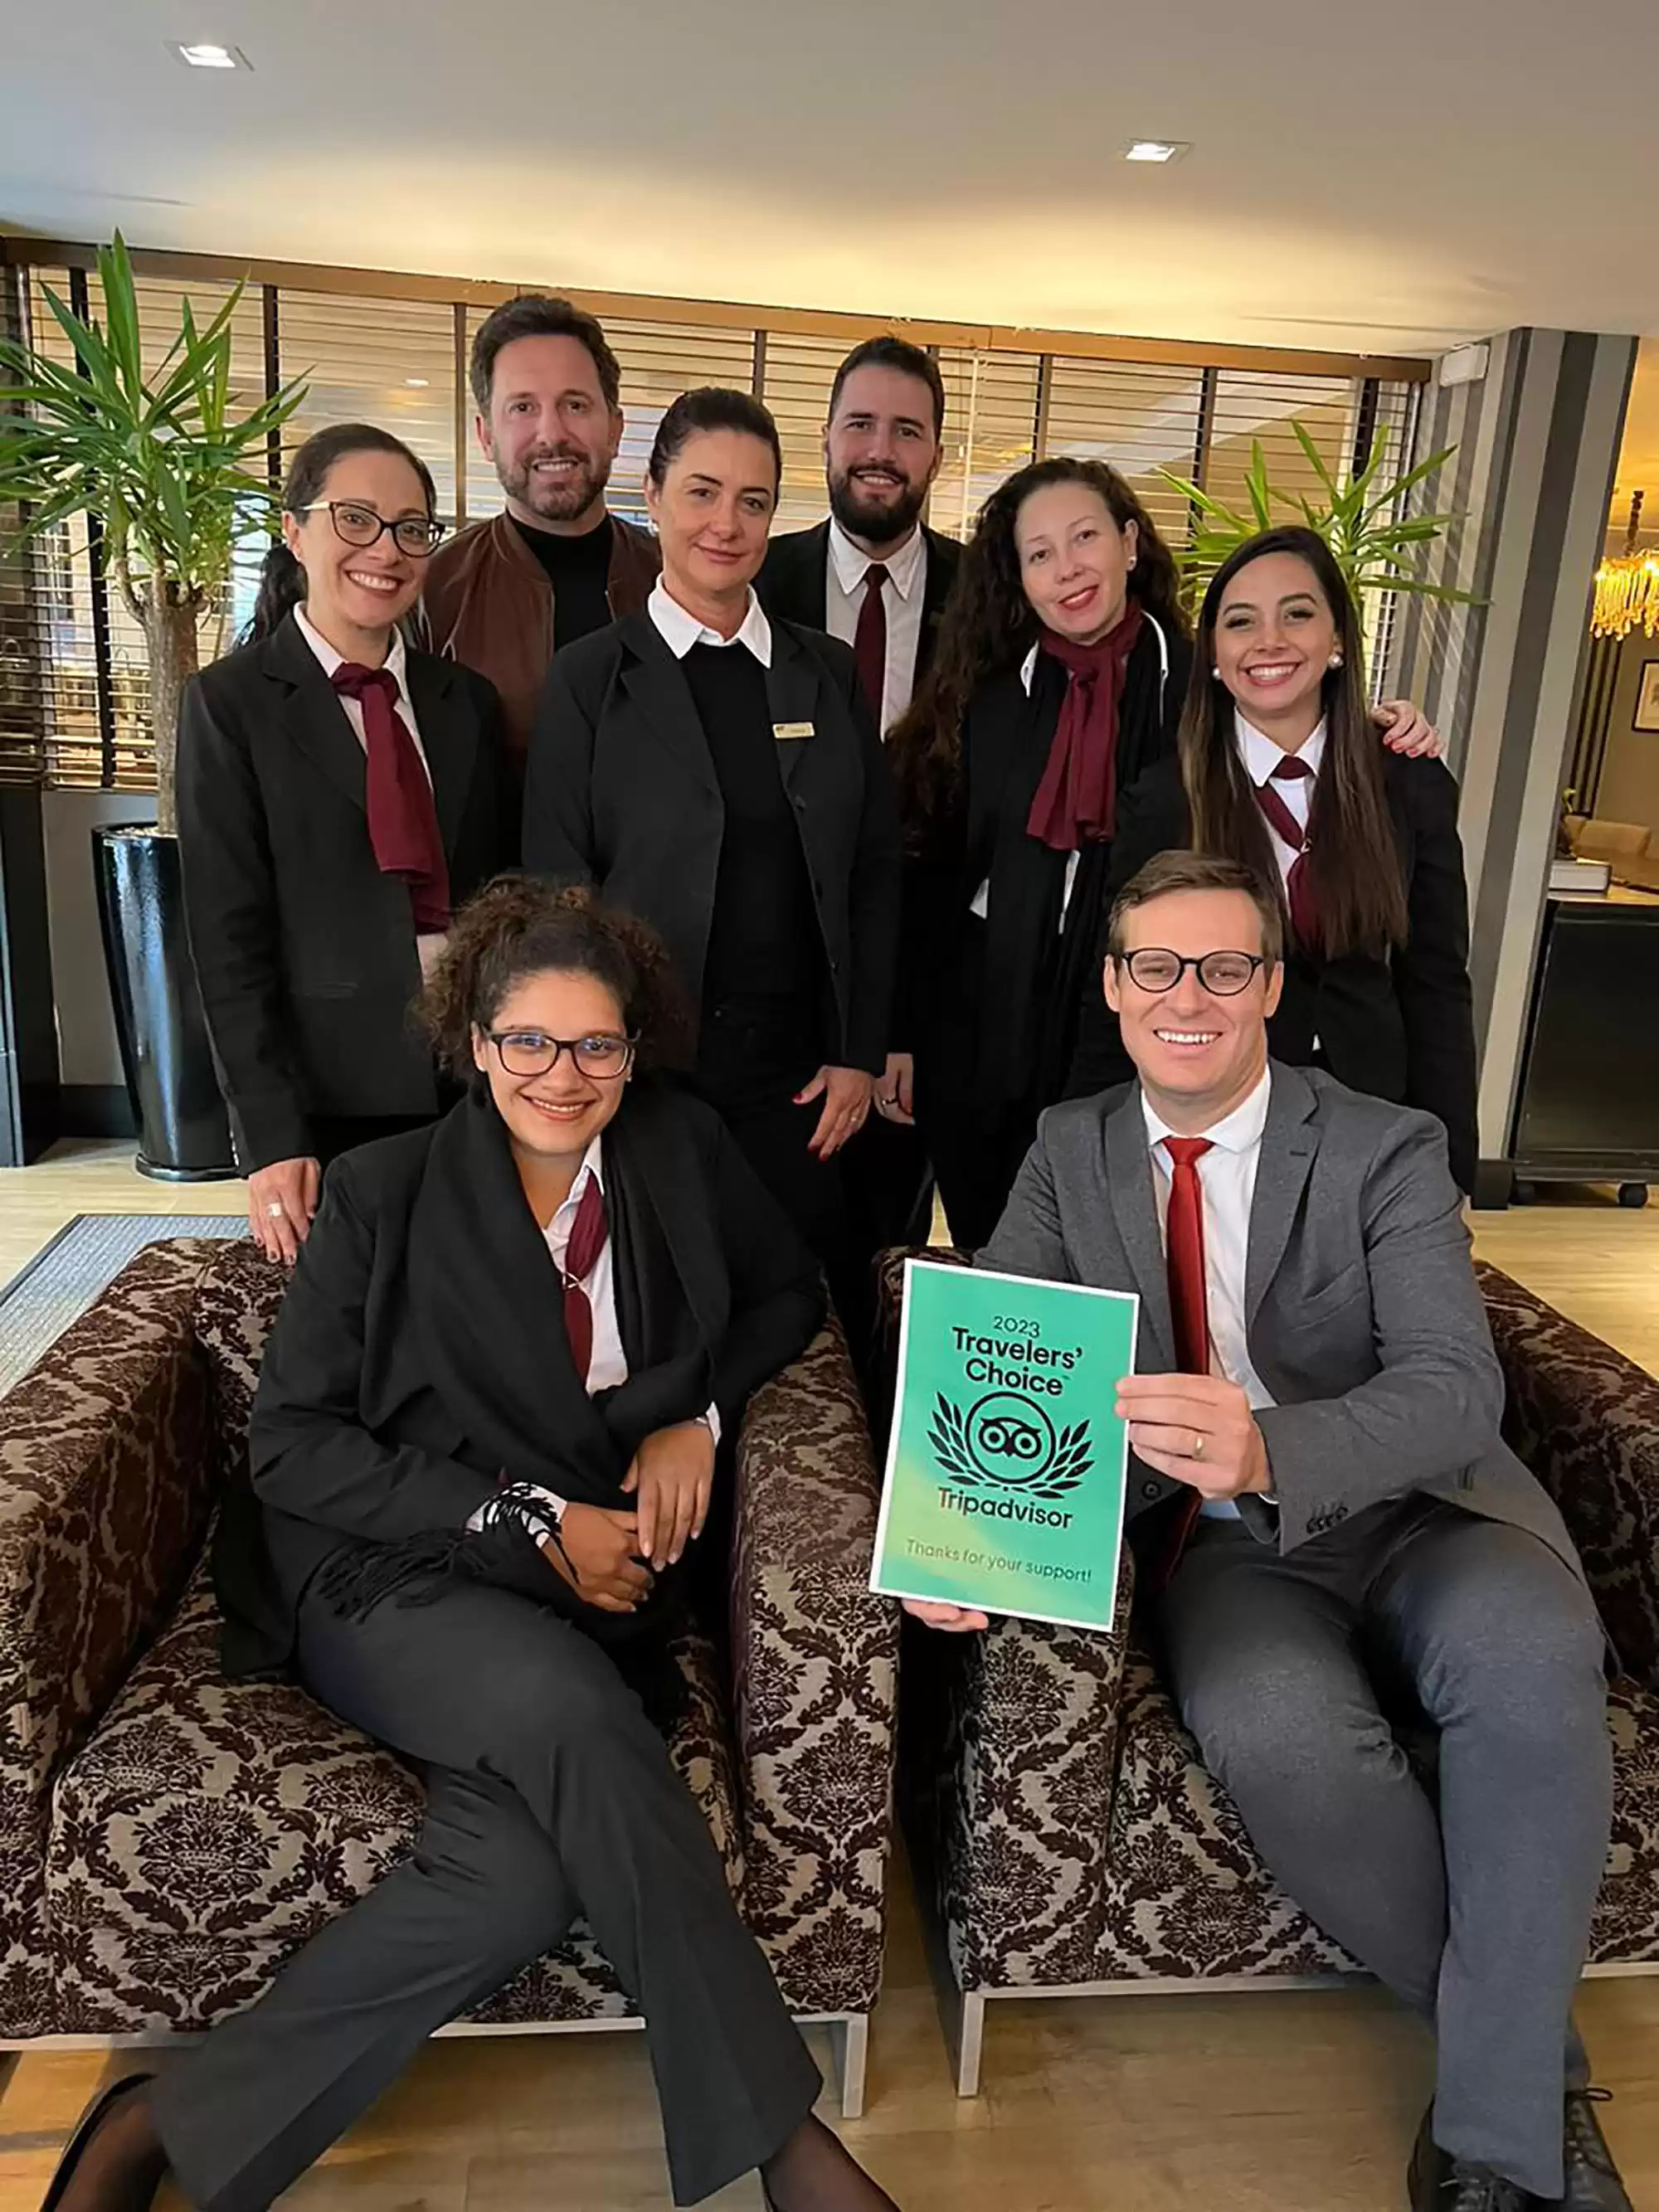 Hotel catarinense recebe pelo 4º ano consecutivo o prêmio Travellers’ Choice